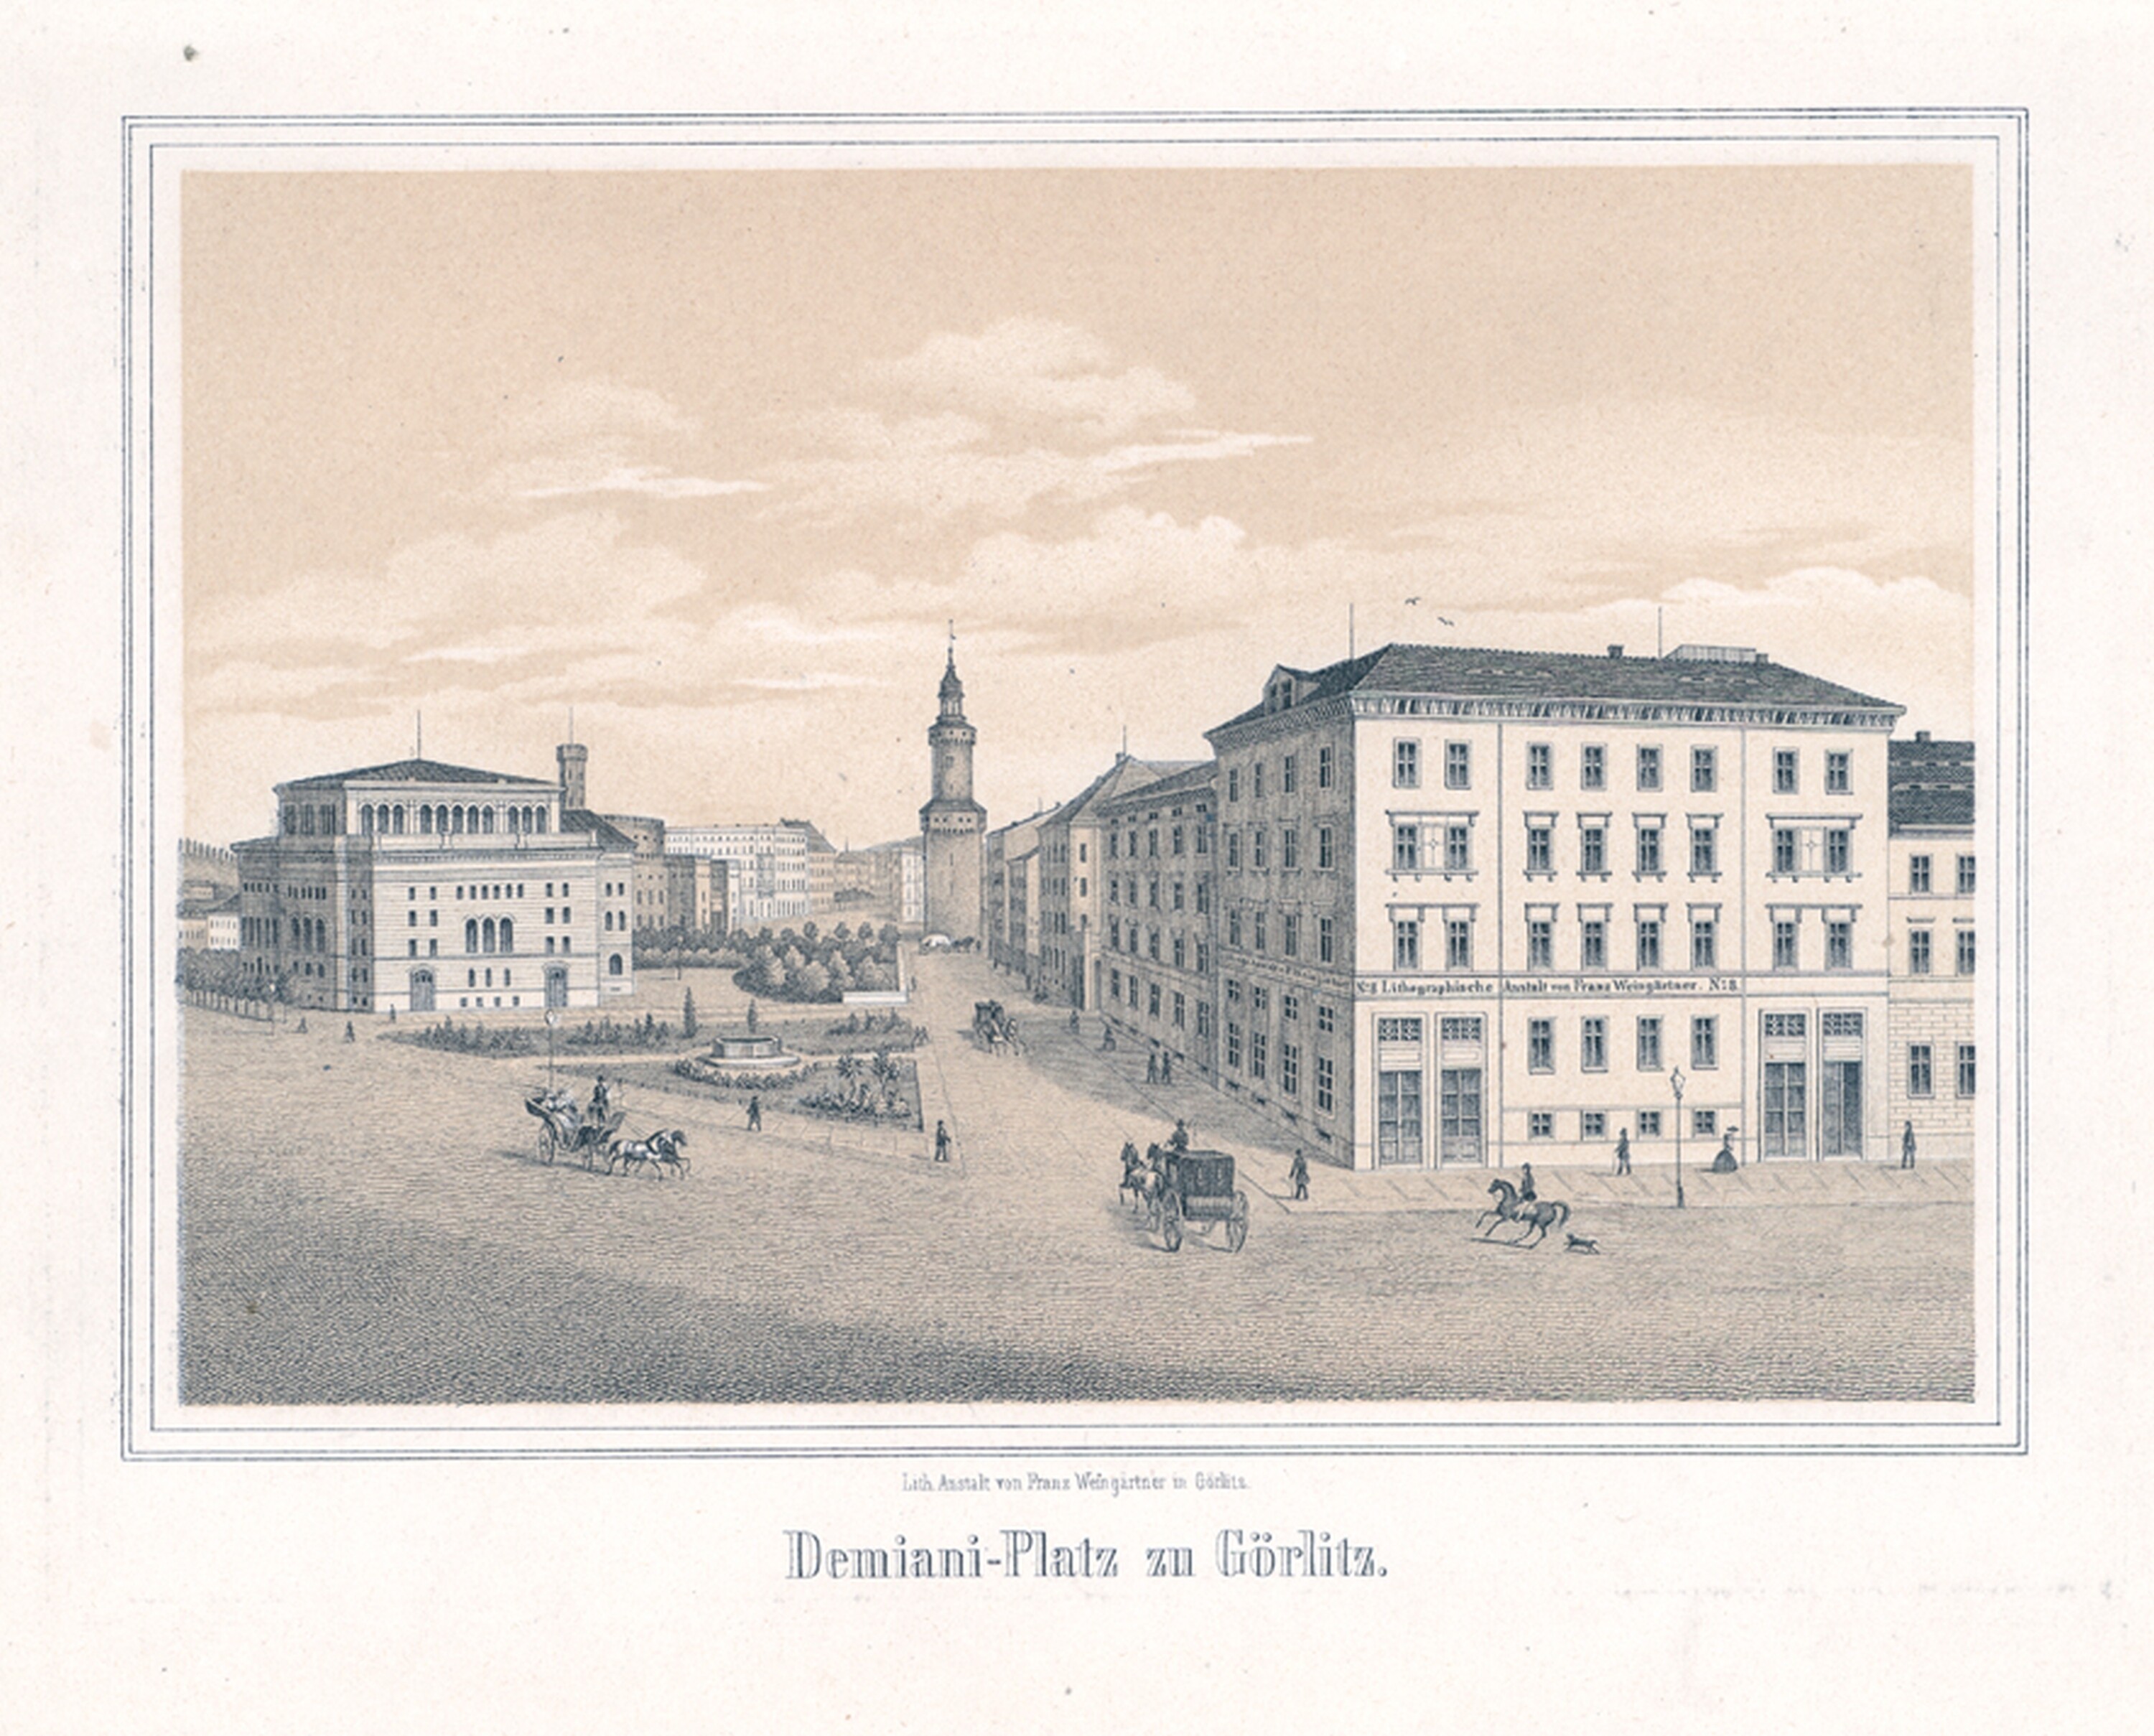 Grafik: "Demiani-Platz zu Görlitz" (Kulturhistorisches Museum Görlitz CC BY-NC-SA)